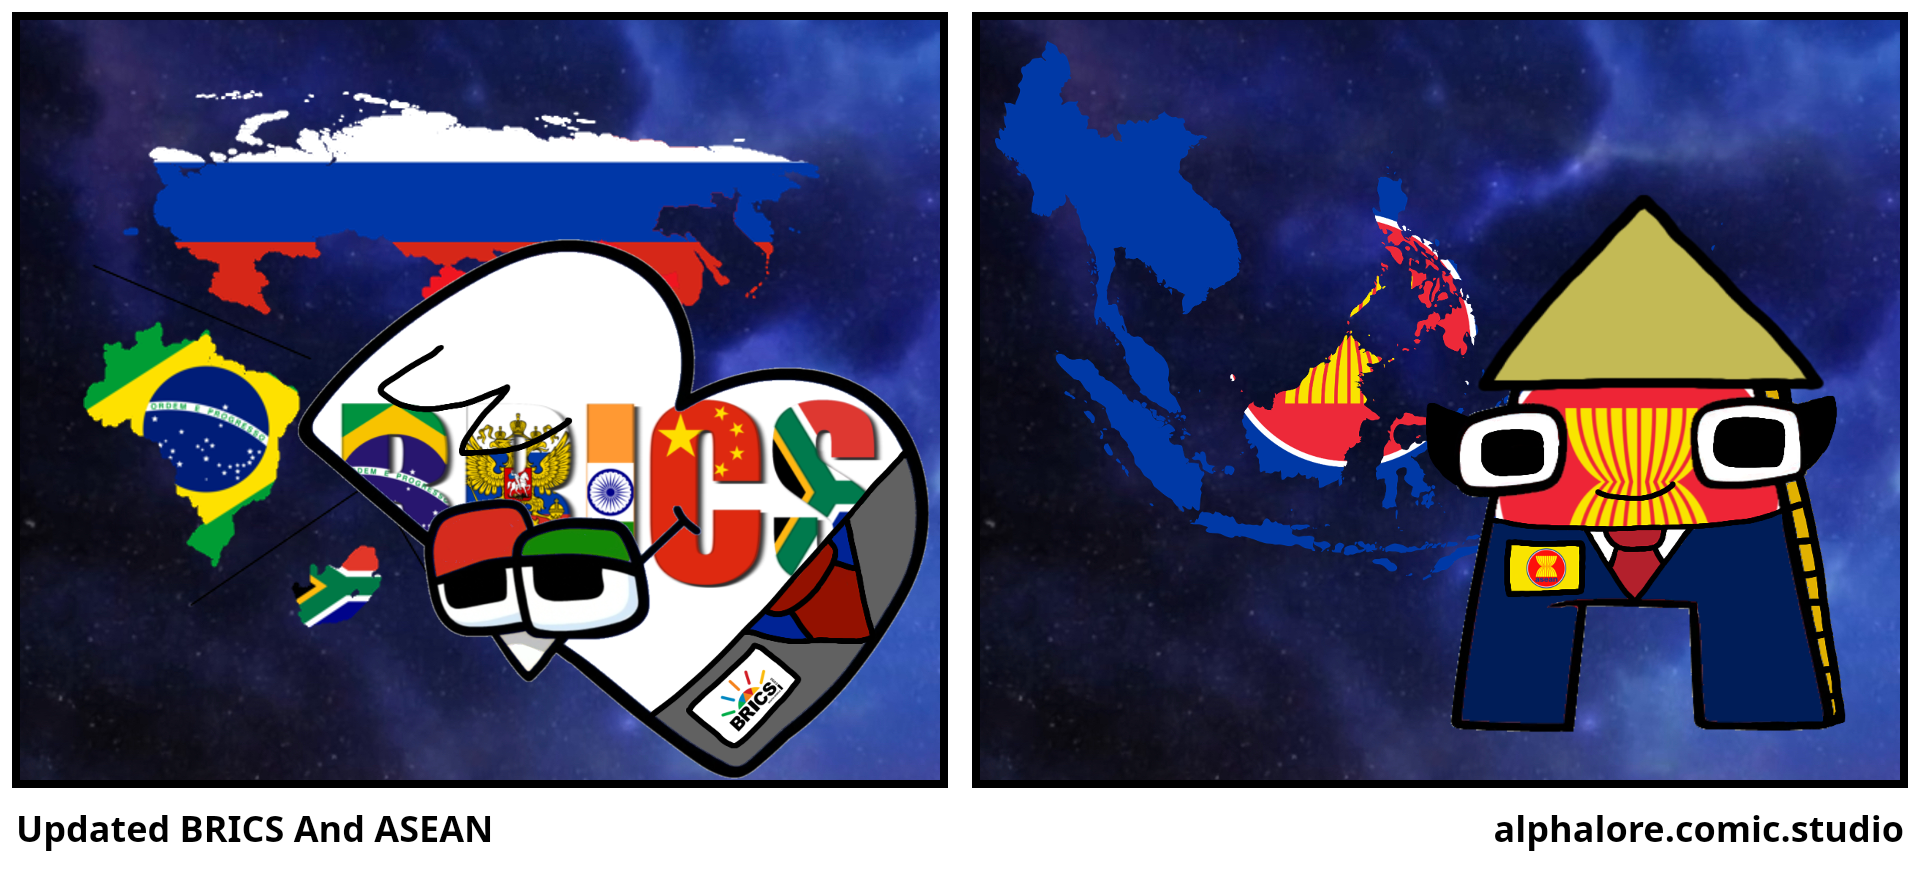 Updated BRICS And ASEAN